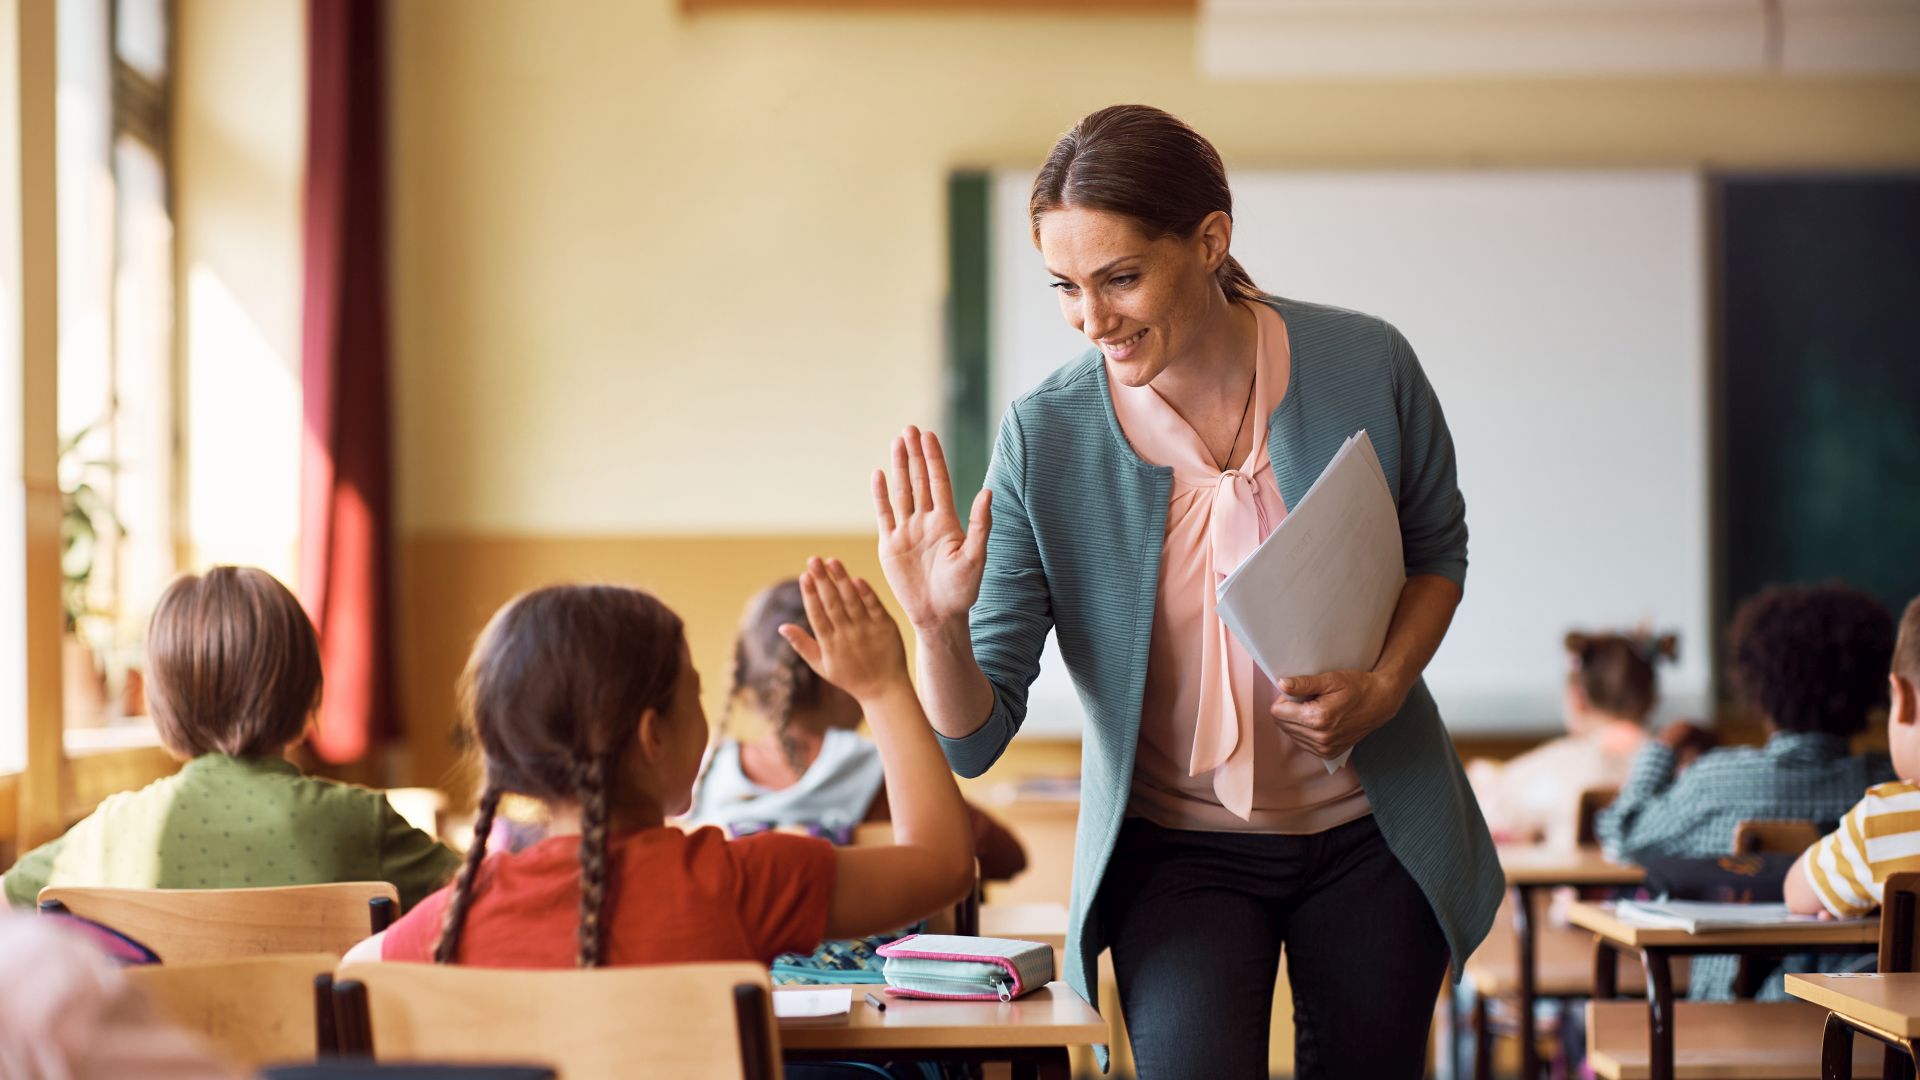 Happy teacher and schoolgirl giving high five during class at school.